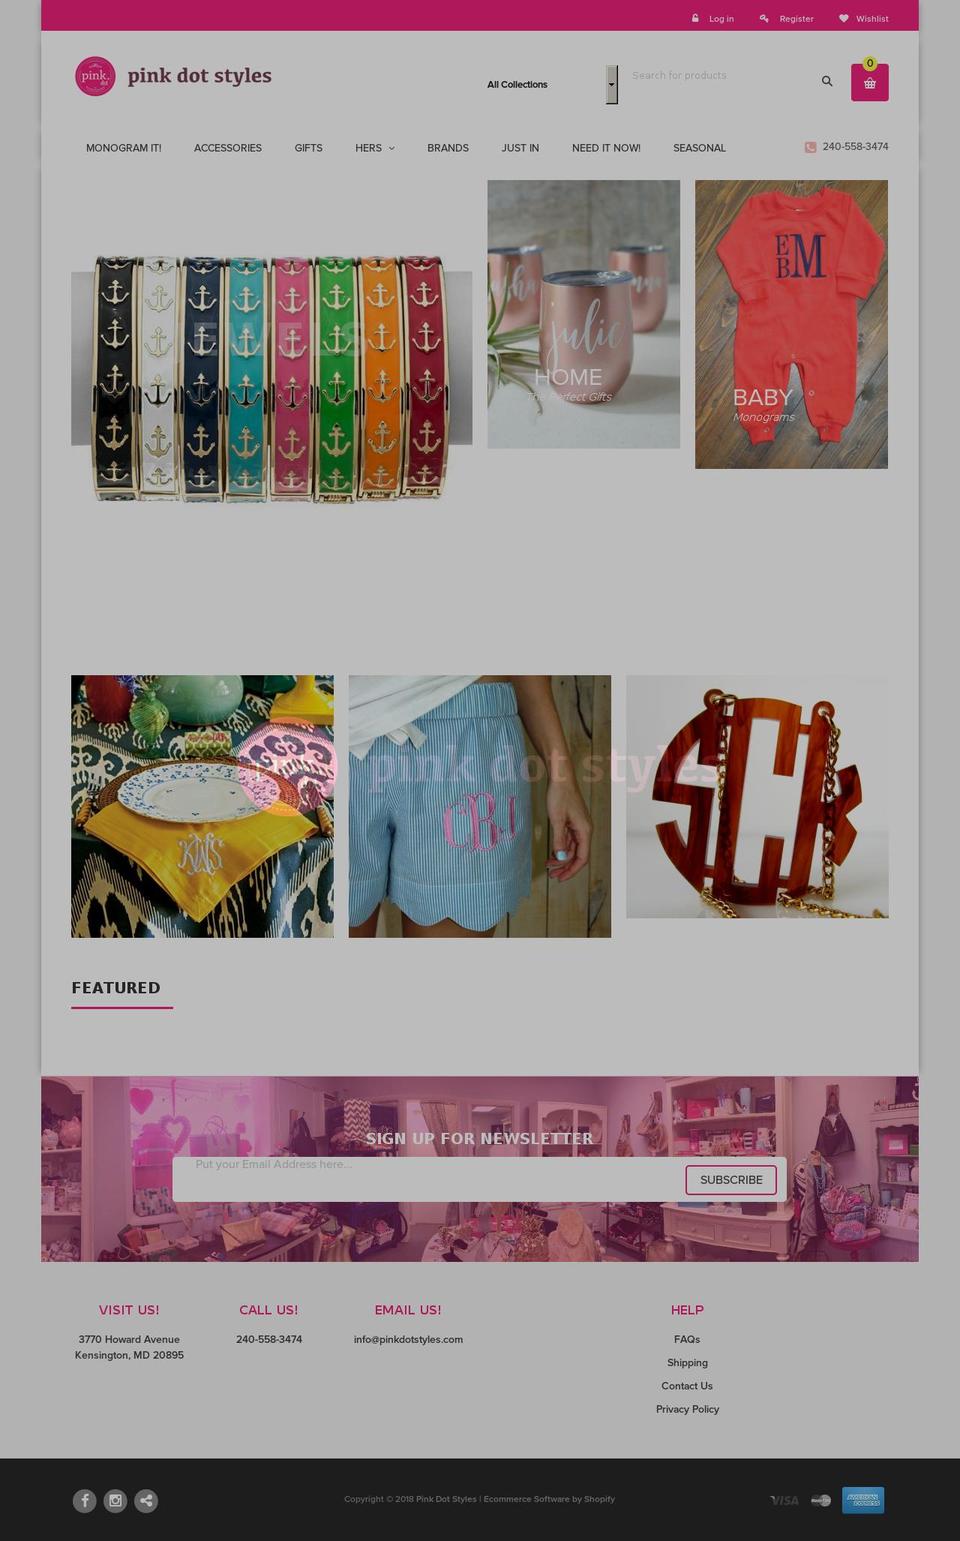 pinkdotstyles.com shopify website screenshot